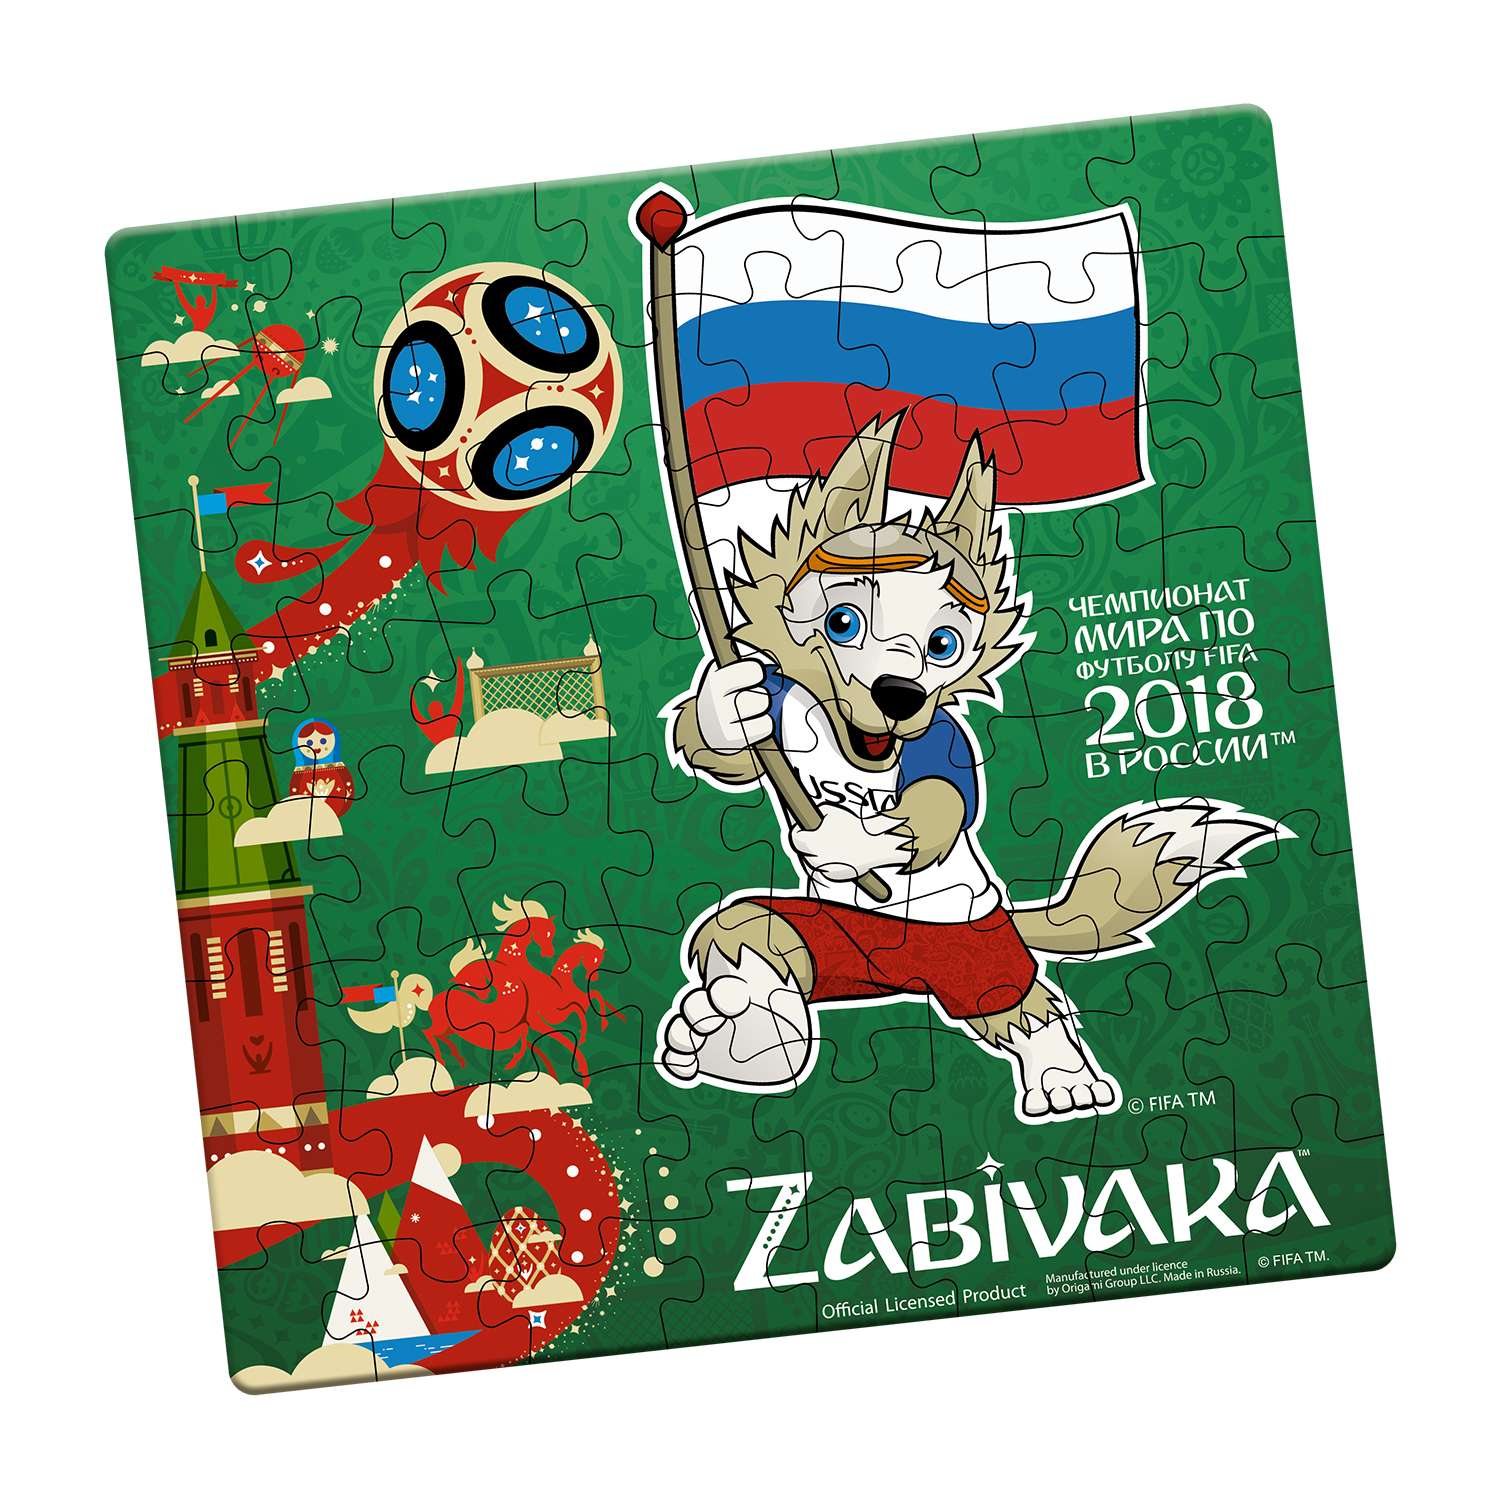 Пазл 2018 FIFA World Cup Russia TM Забивака (03793) 64 элемента в ассортименте - фото 8